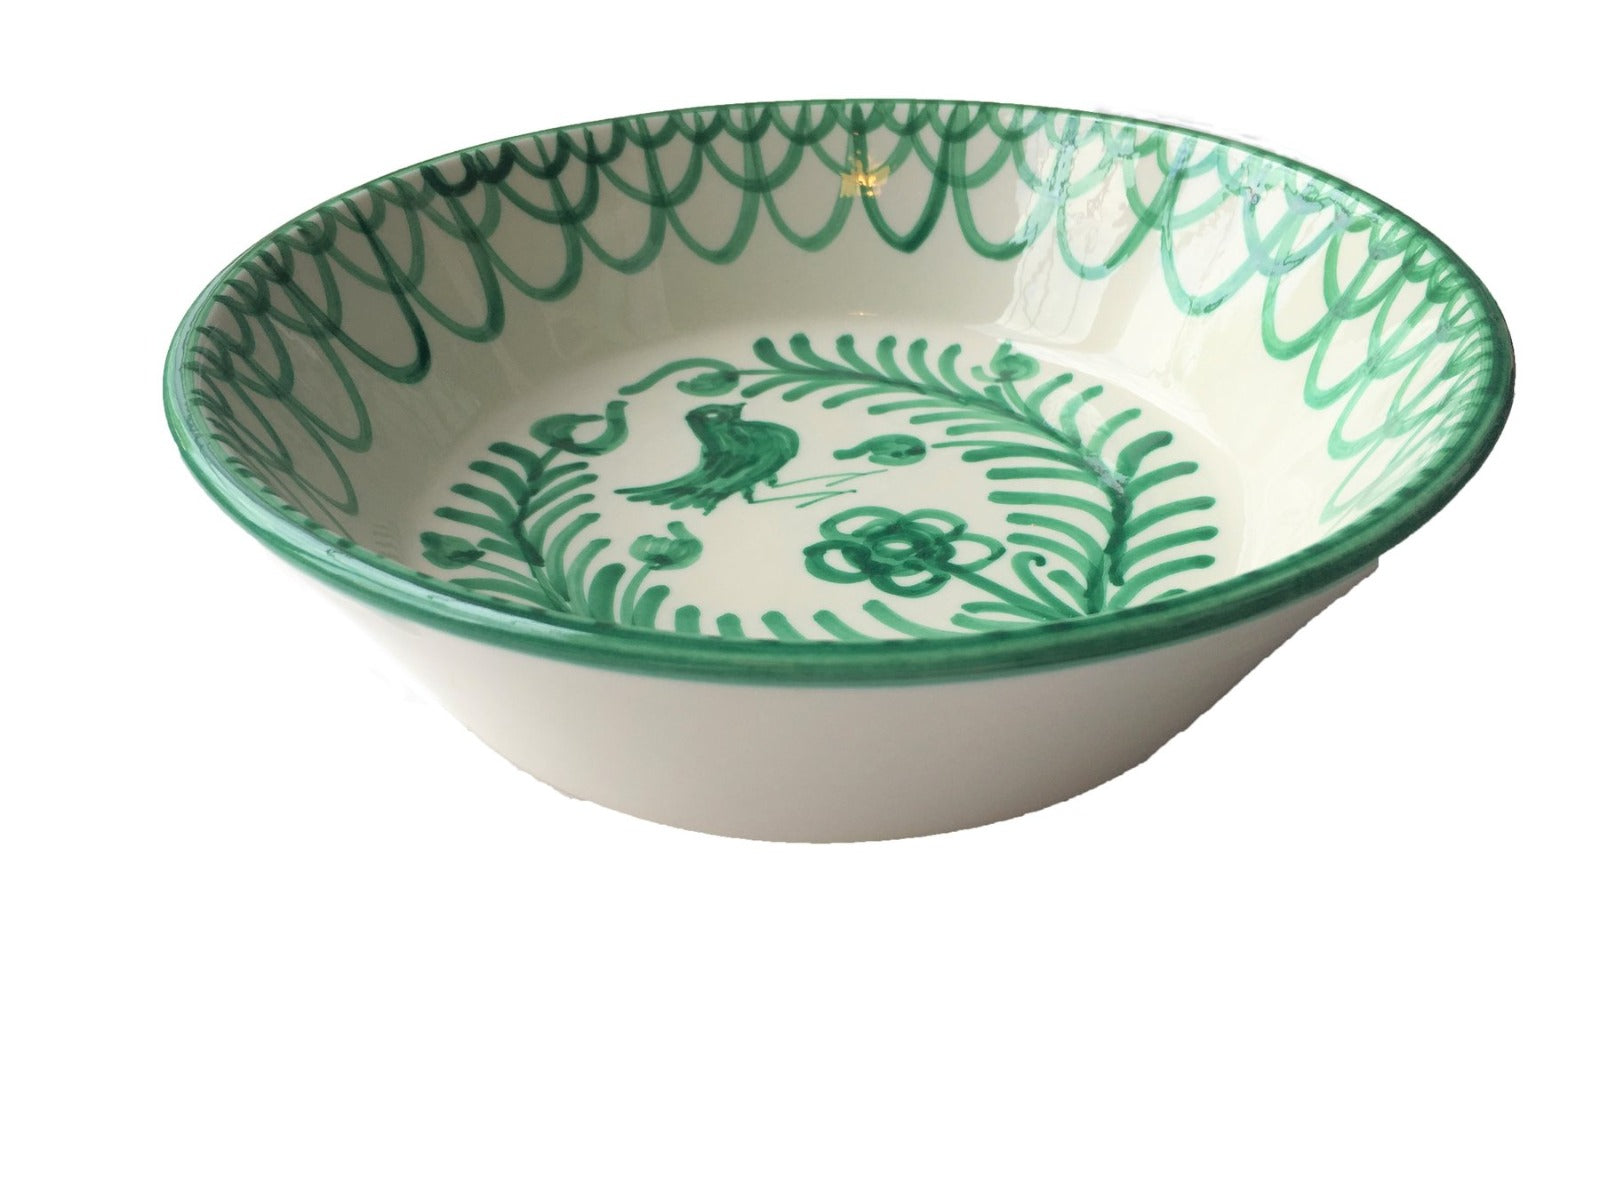 Spanish Lebrillo Large Bowl with Green 'Bird' Design